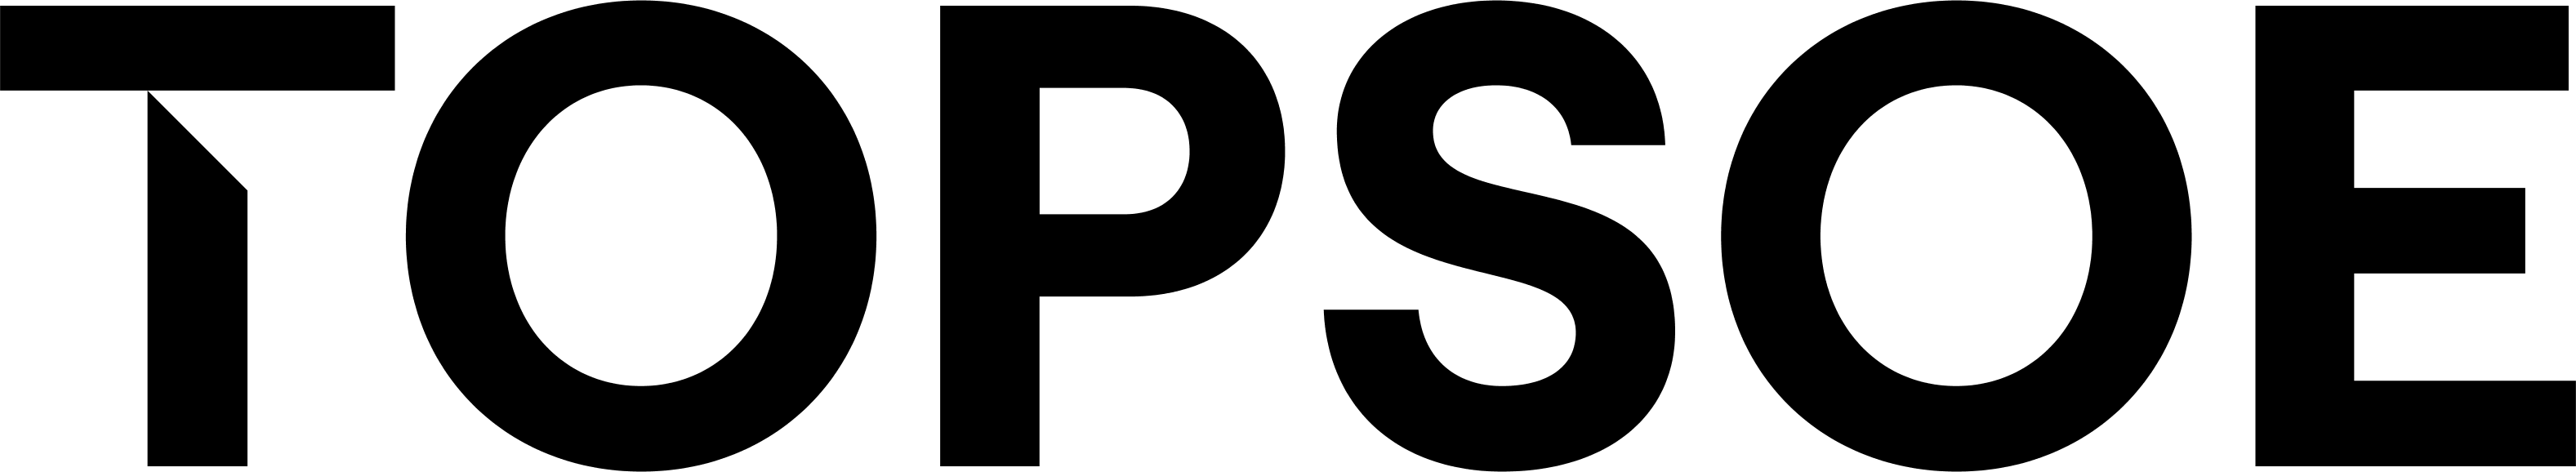 Haldor Topsoe logo positive